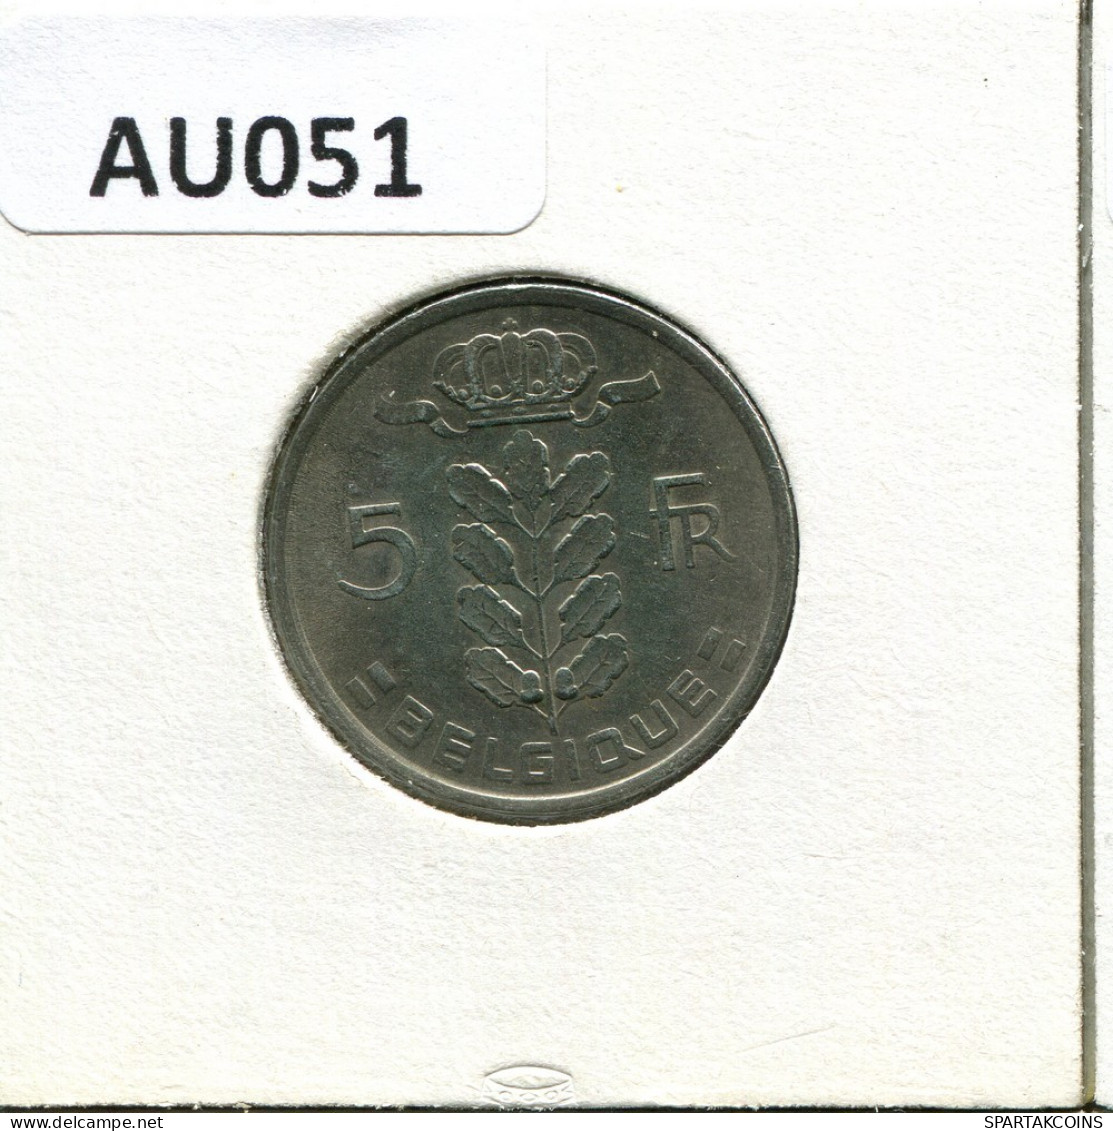 5 FRANCS 1974 FRENCH Text BELGIUM Coin #AU051.U.A - 5 Frank